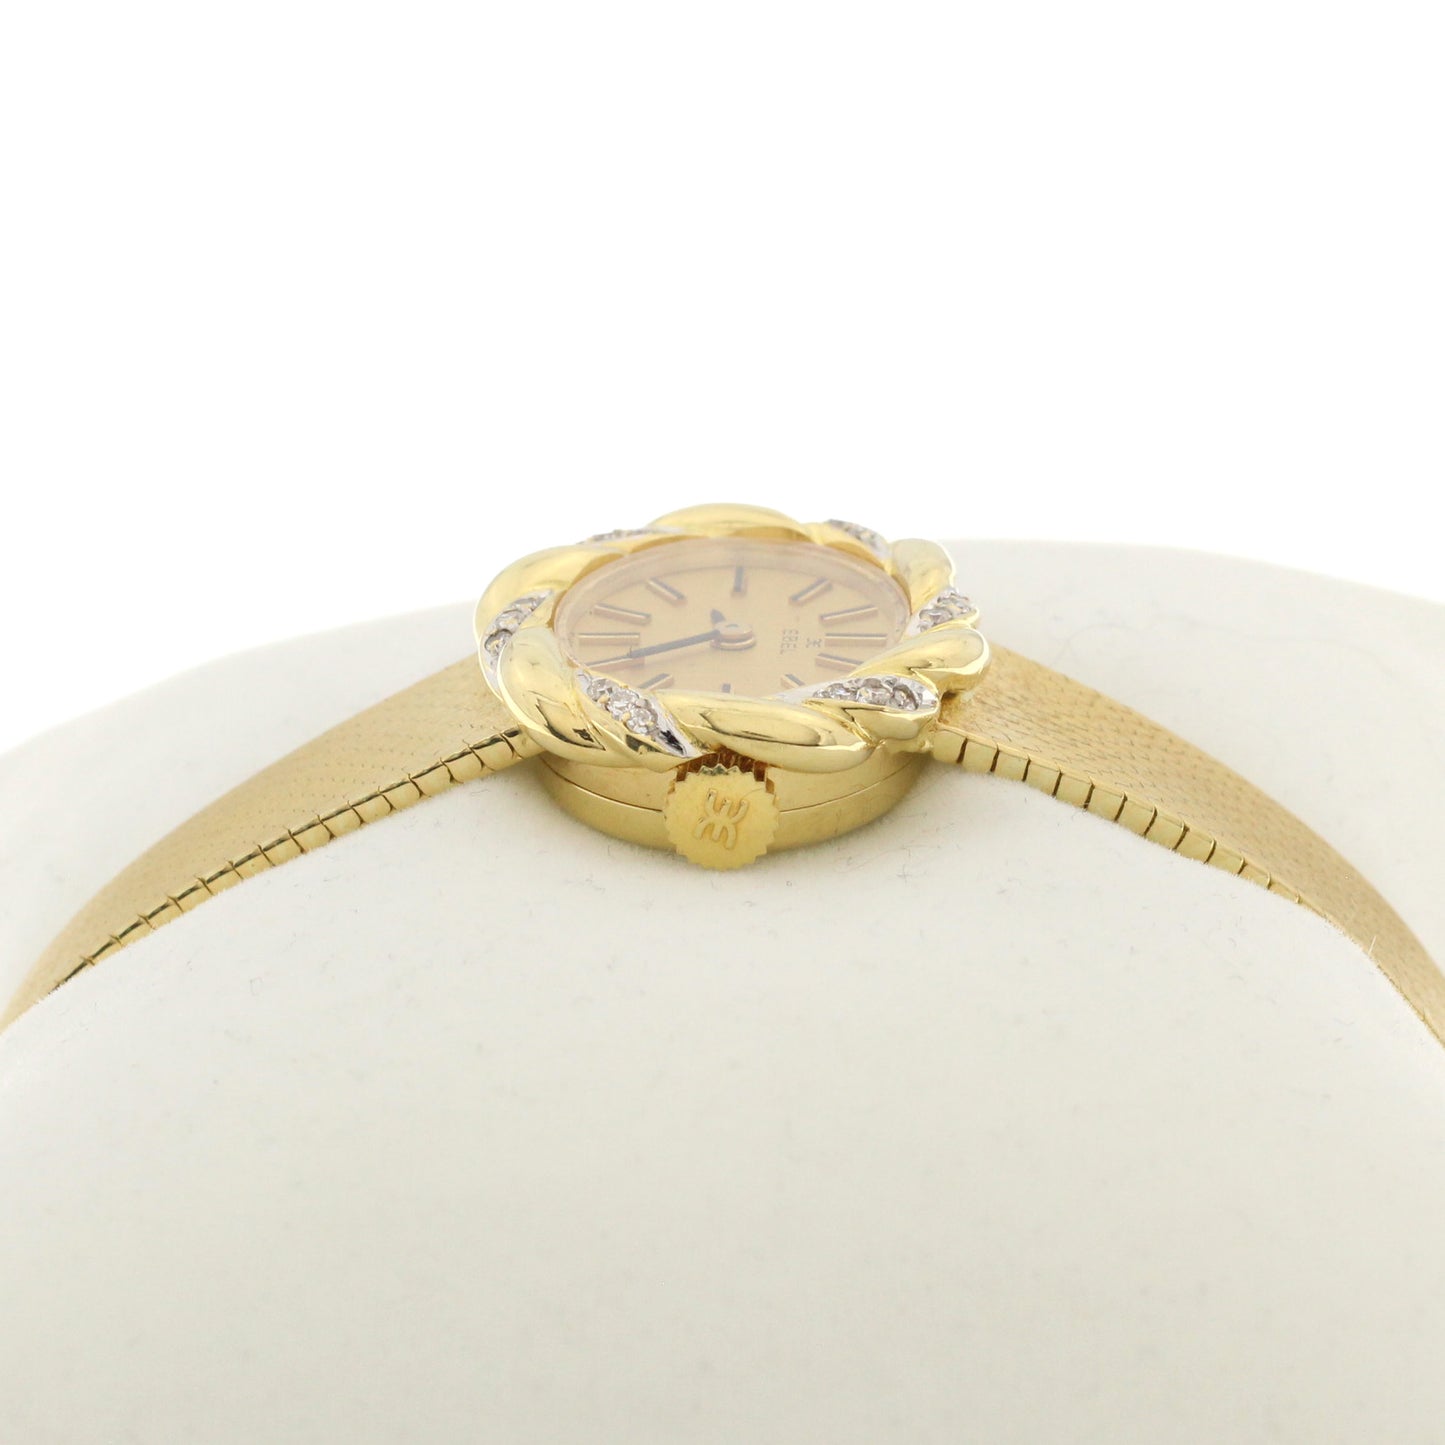 EBEL Damen Uhr Armbanduhr 750 Gold 18 kt Brillanten 0,15ct